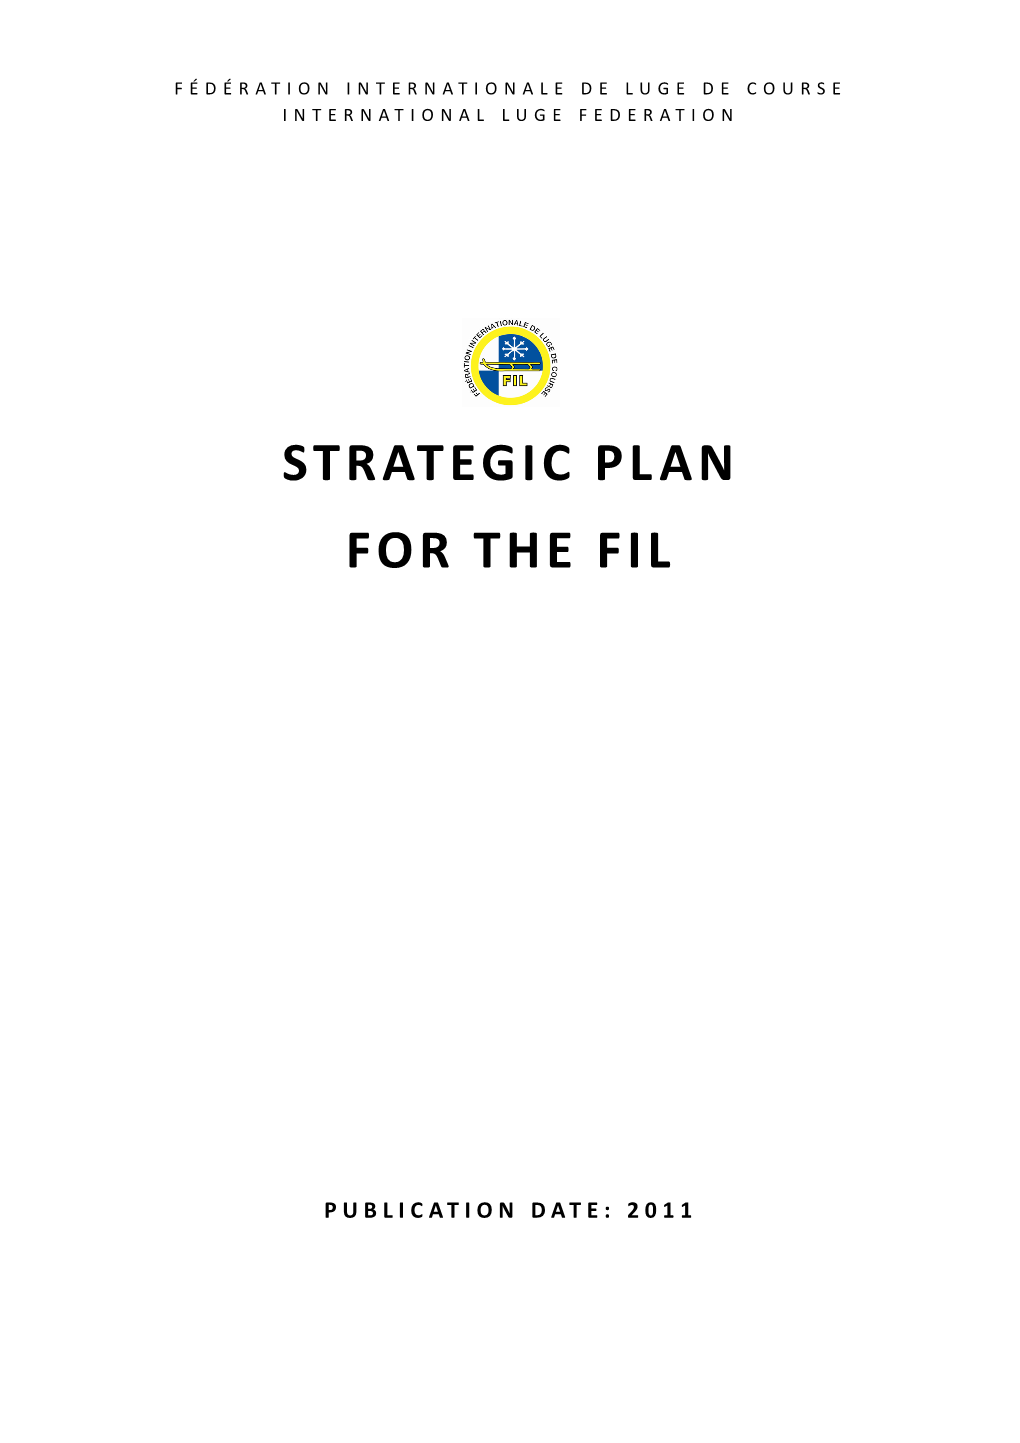 Strategic Plan for the Fil